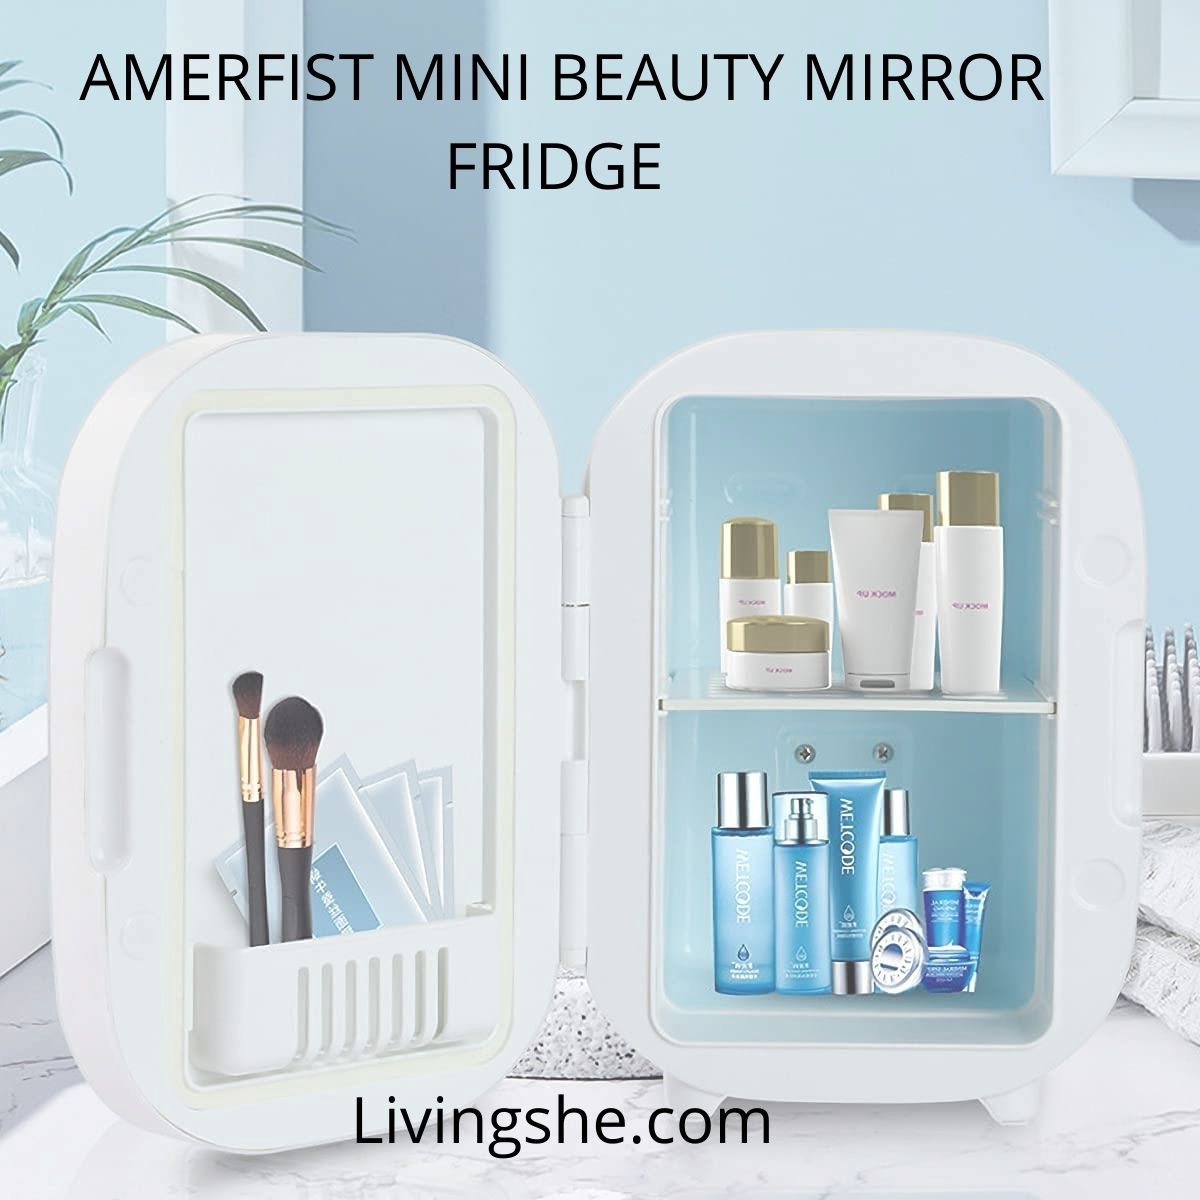 AMERFIST MINI BEAUTY MIRROR FRIDGE – A stylish addition to your bedroom